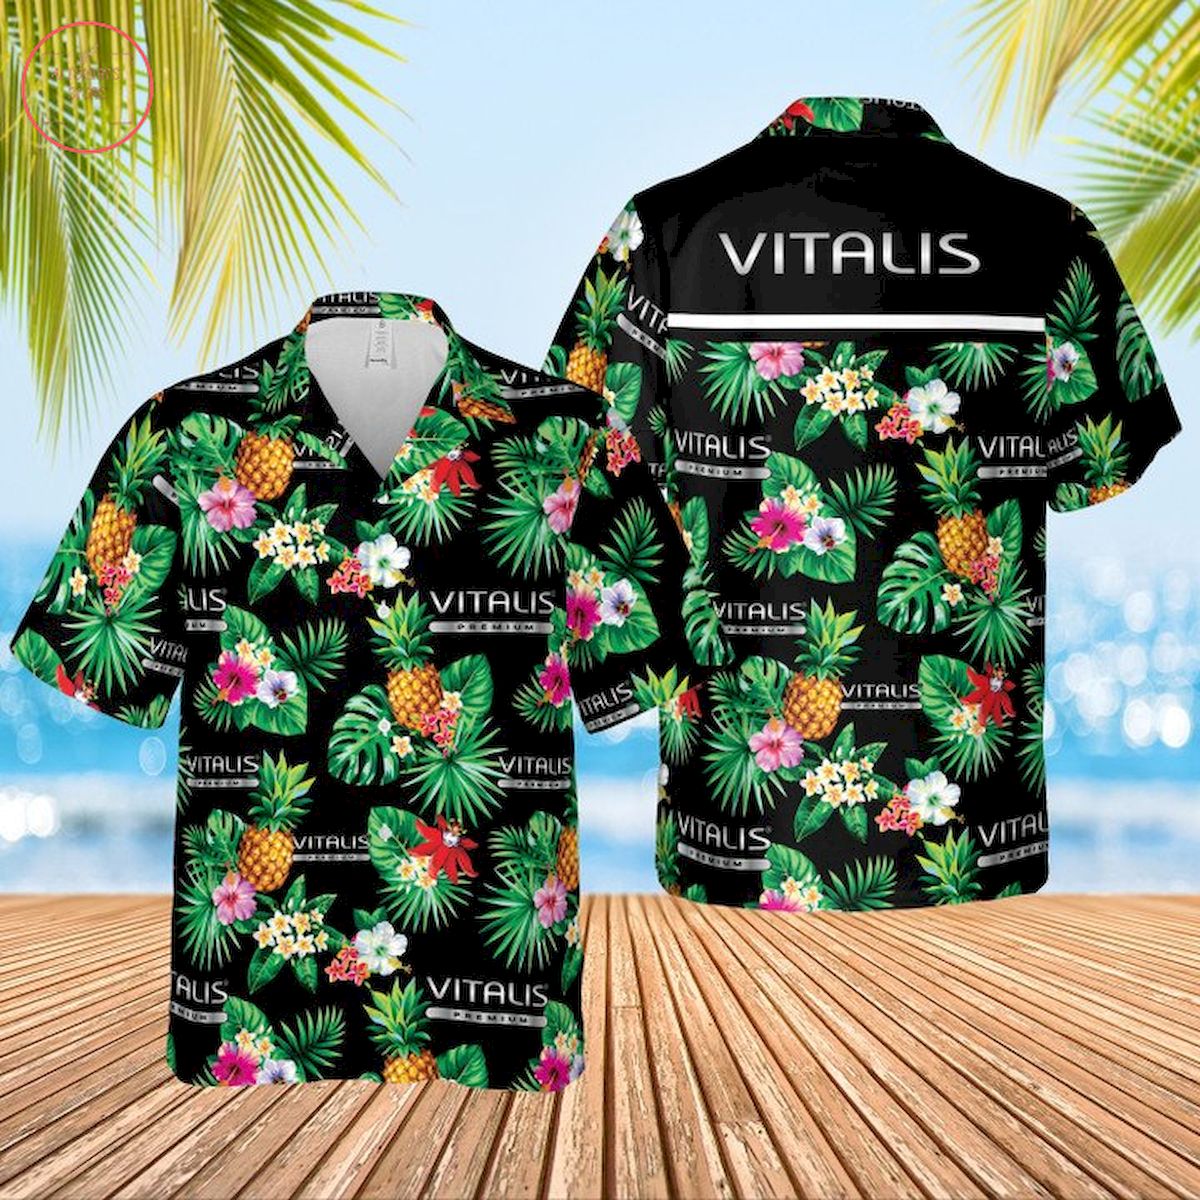 Vitalis Condoms Hawaiian Shirt and Shorts